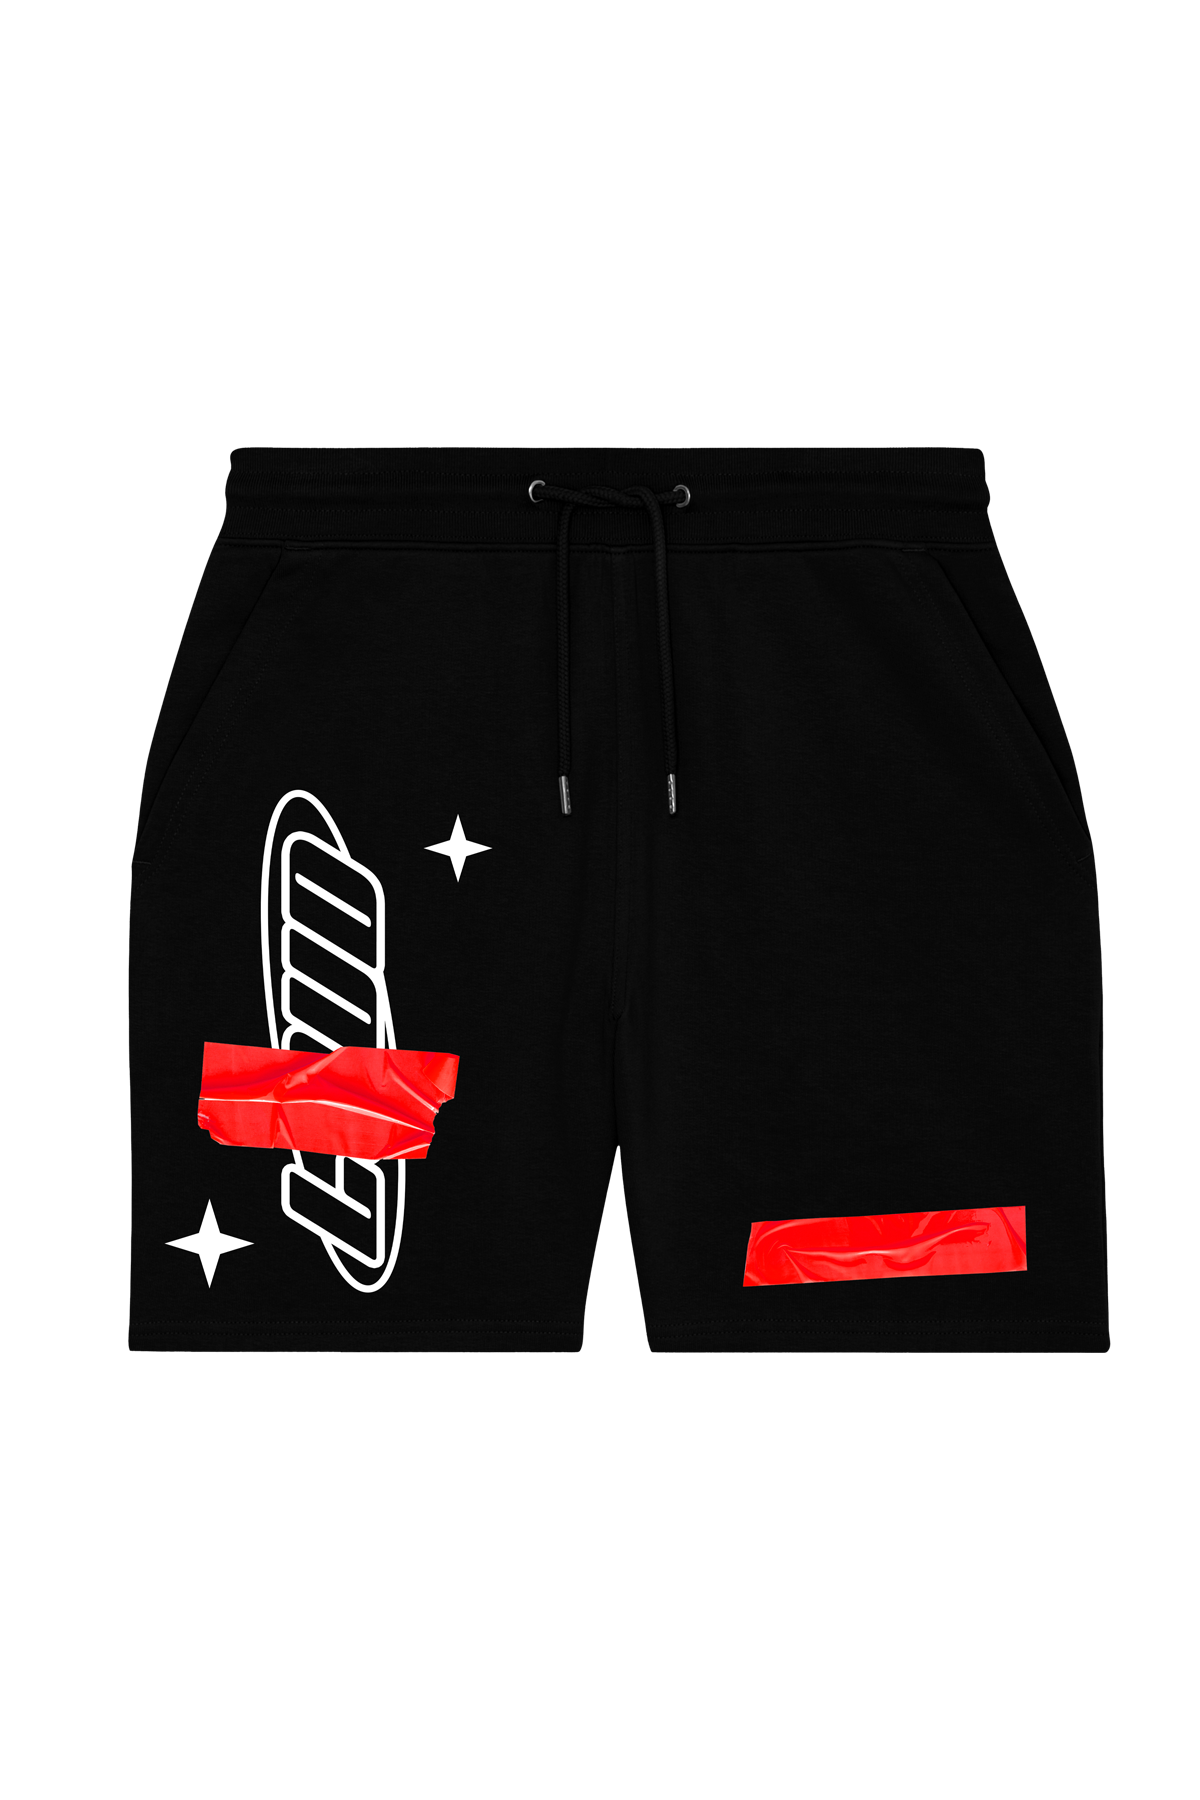 Loud Logo Print Red Tape - Black Cotton Shorts - Live Look Loud